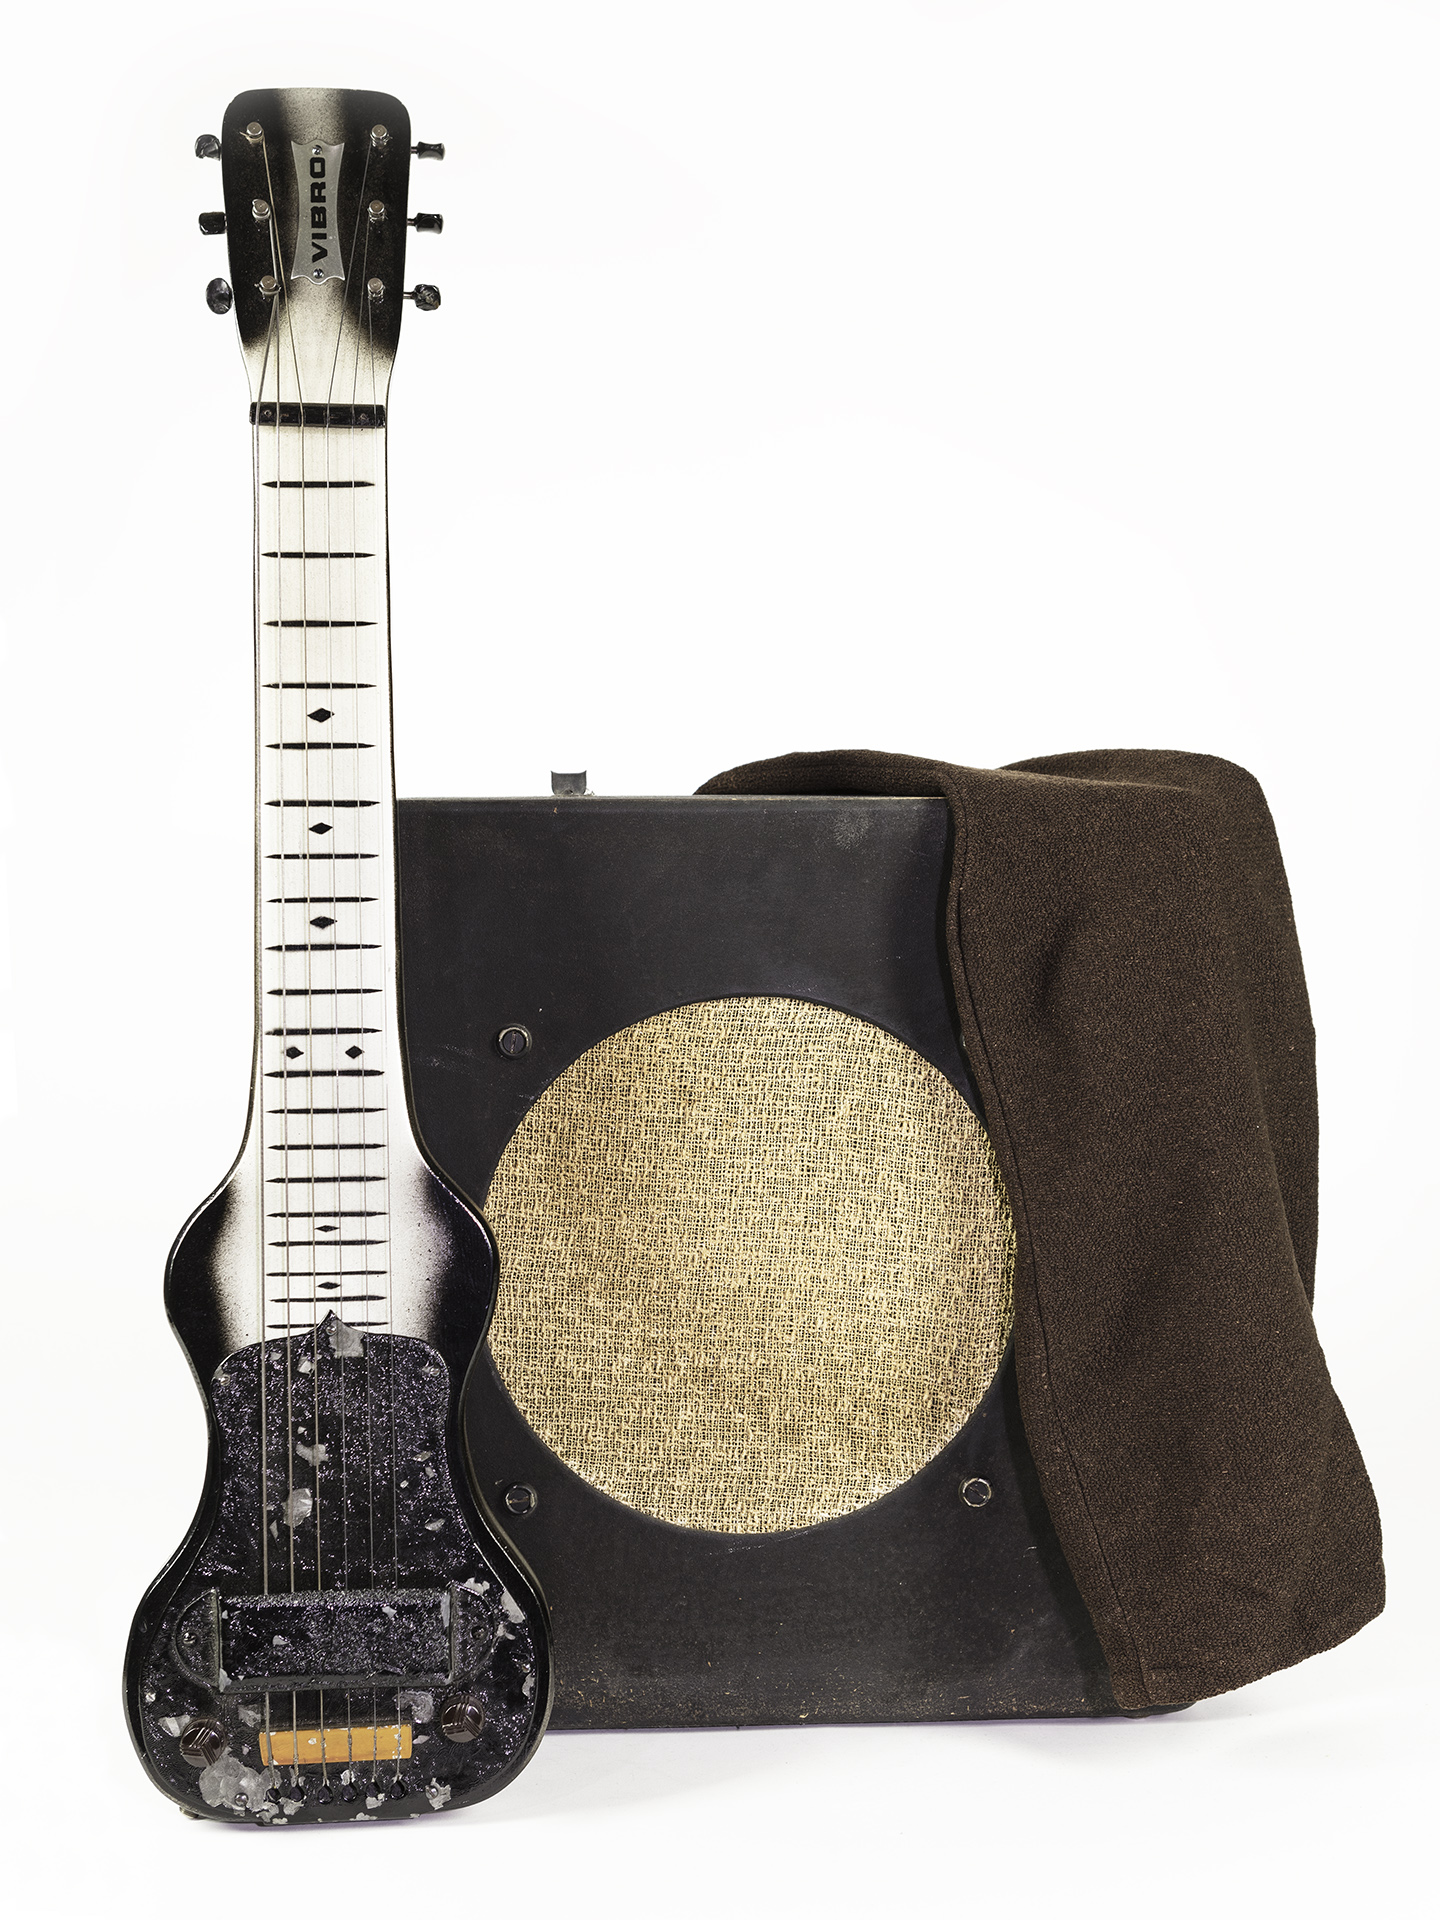 Fender, The First Fender Guitar